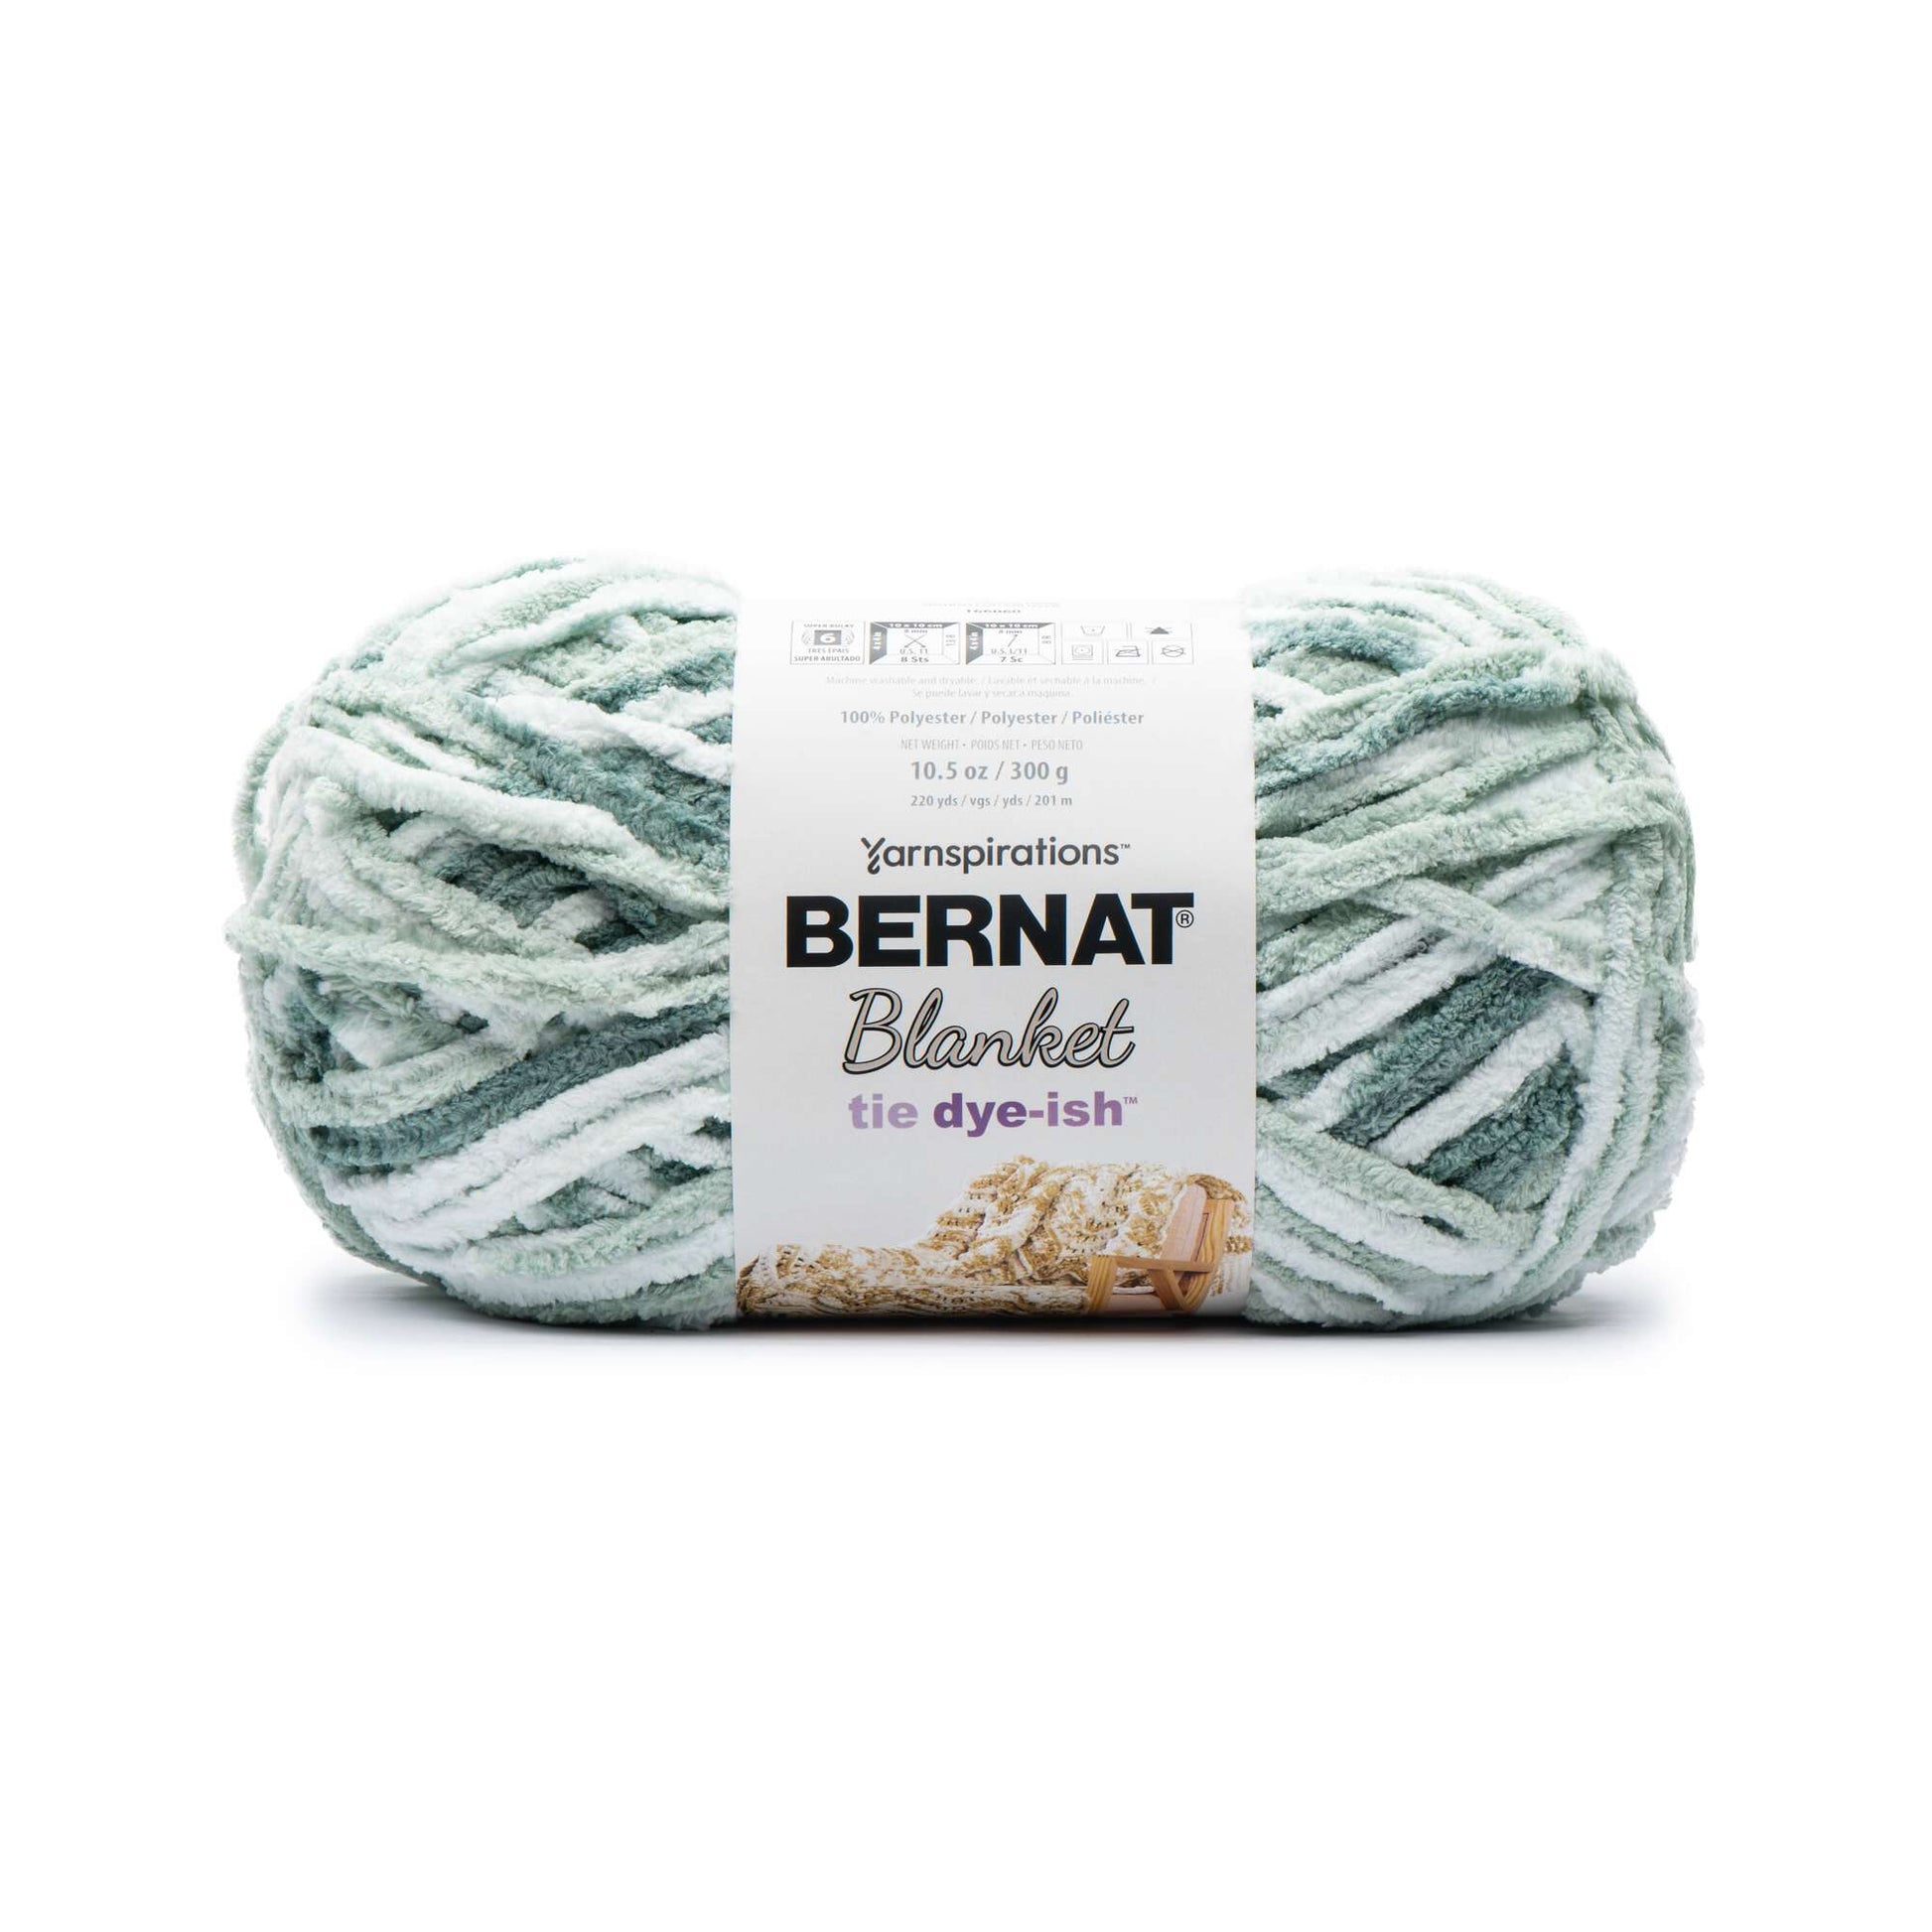 Bernat Blanket Tie Dye-ish Yarn (300g/10.5oz) Mossy Hills